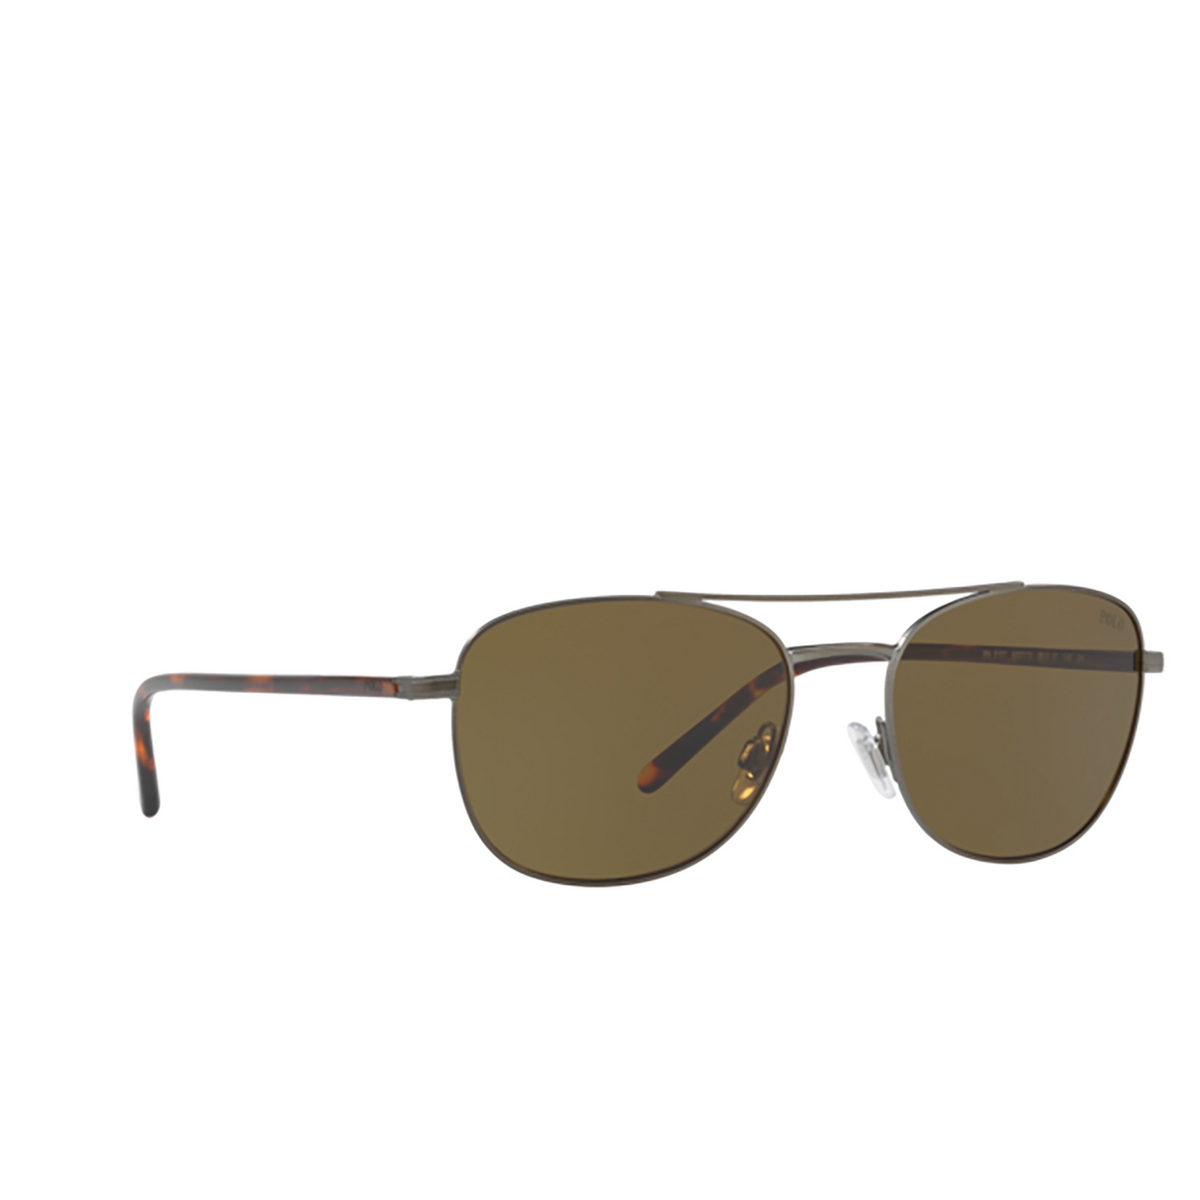 Polo Ralph Lauren® Square Sunglasses: PH3107 color 932773 - three-quarters view.